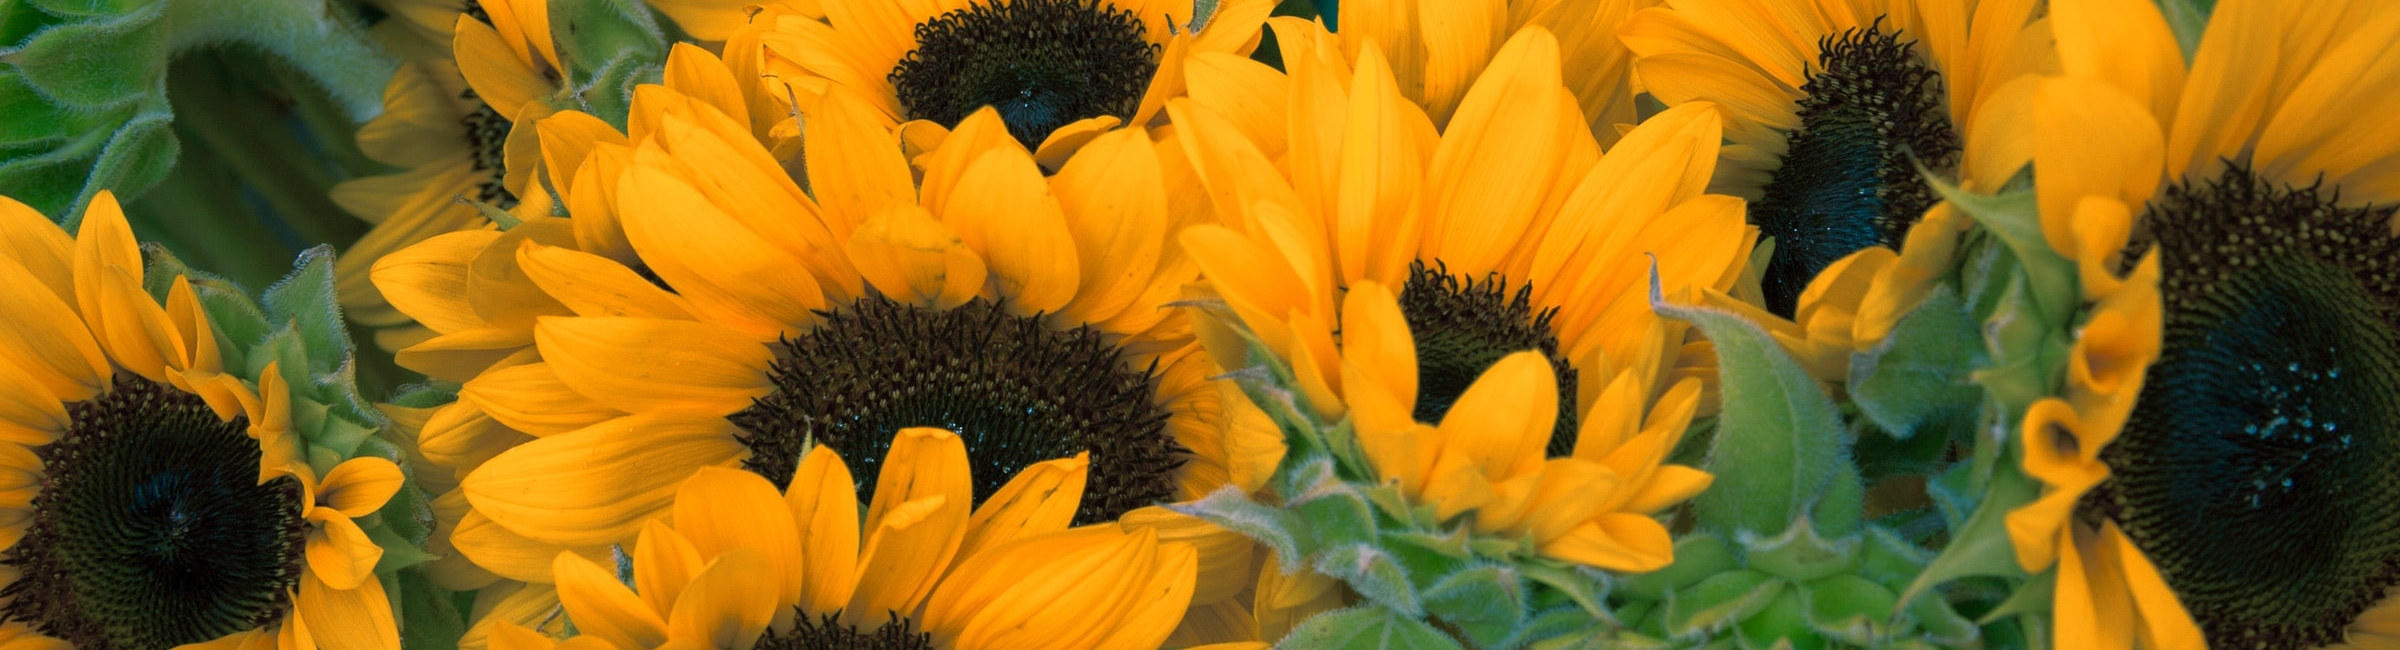 a field of sunflowers - Ukraine's national flower